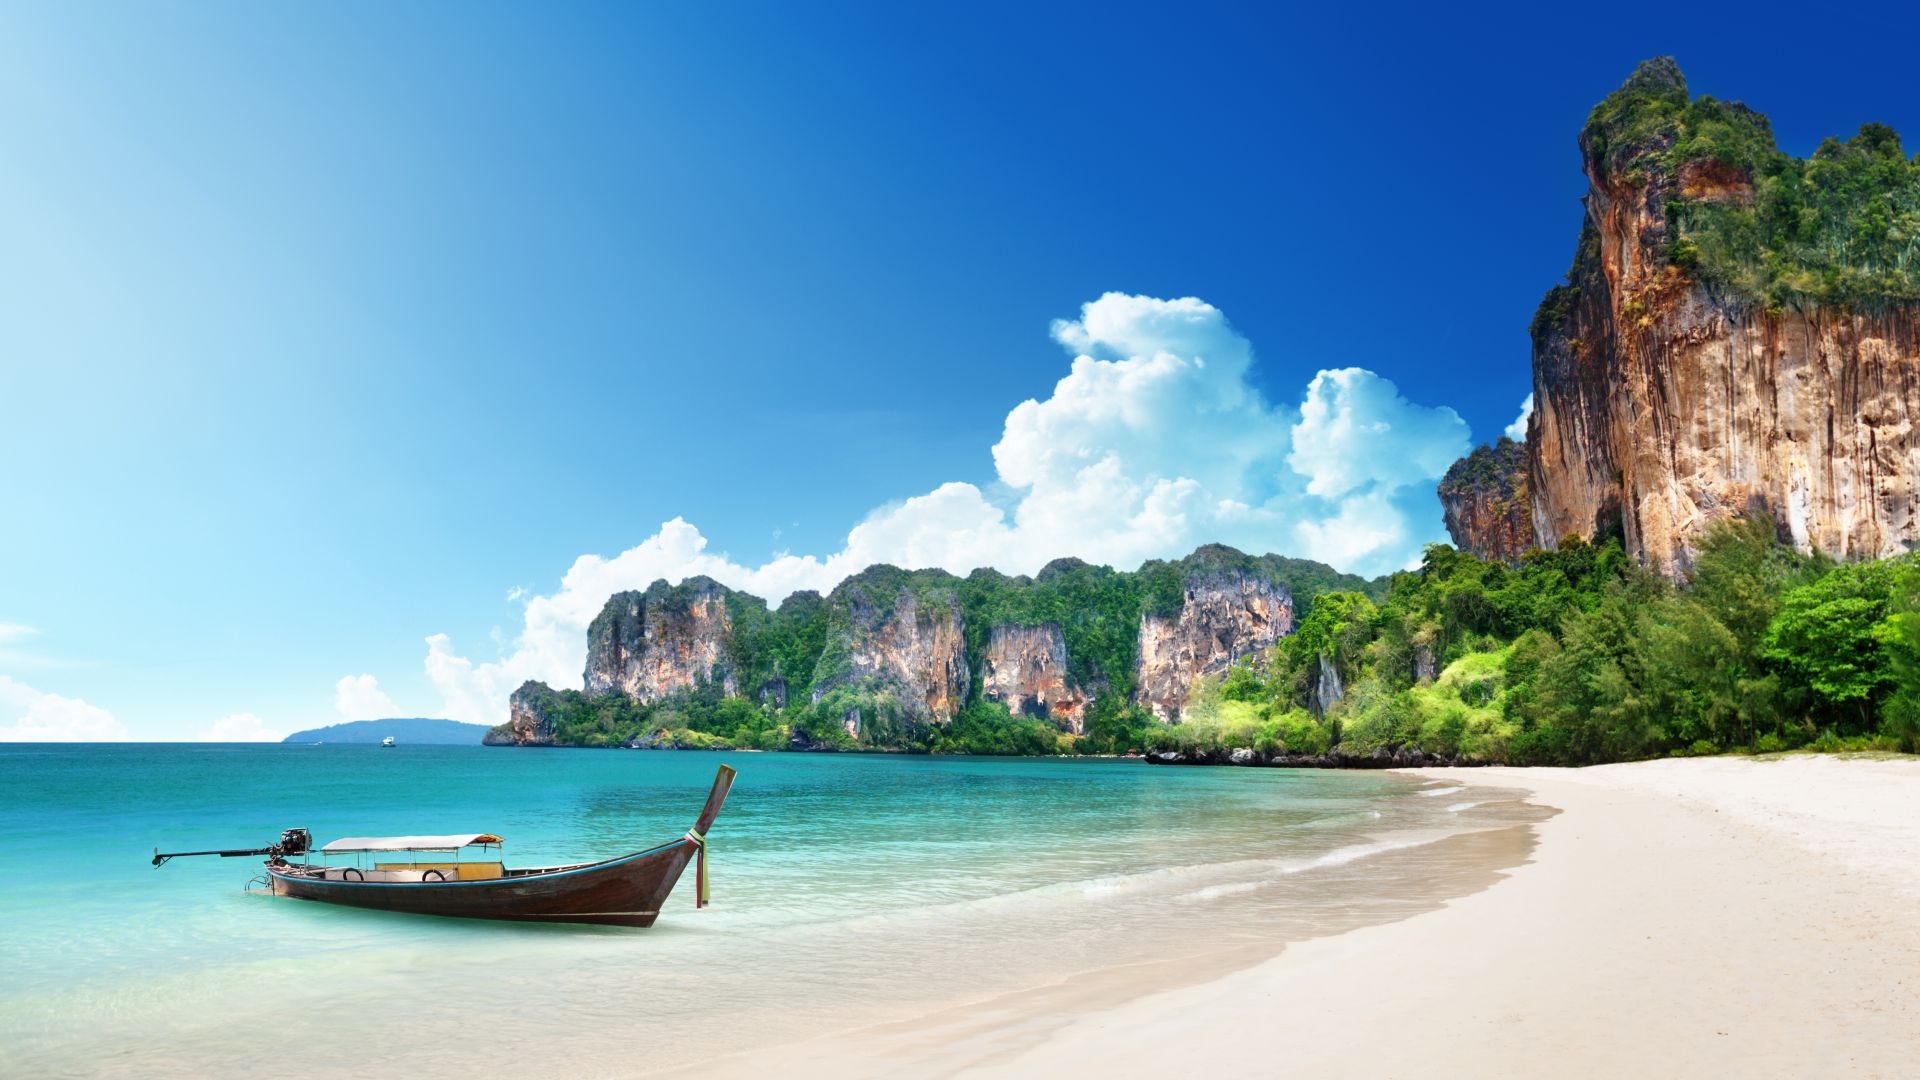 Thailand, 5k, 4k wallpaper, 8k, beach, shore, boat, rocks, travel, tourism (horizontal)